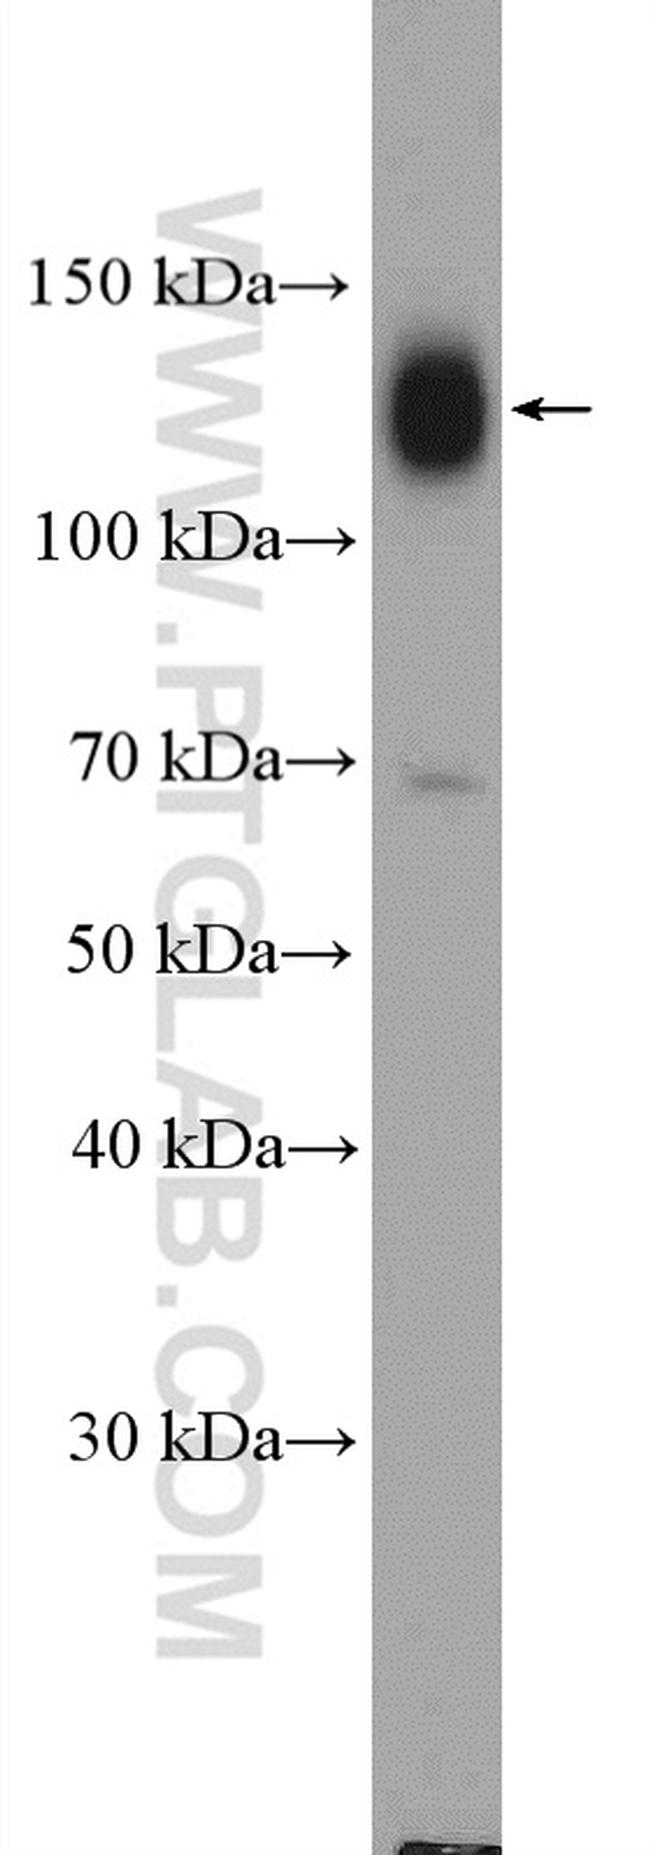 Integrin beta-1 Antibody in Western Blot (WB)